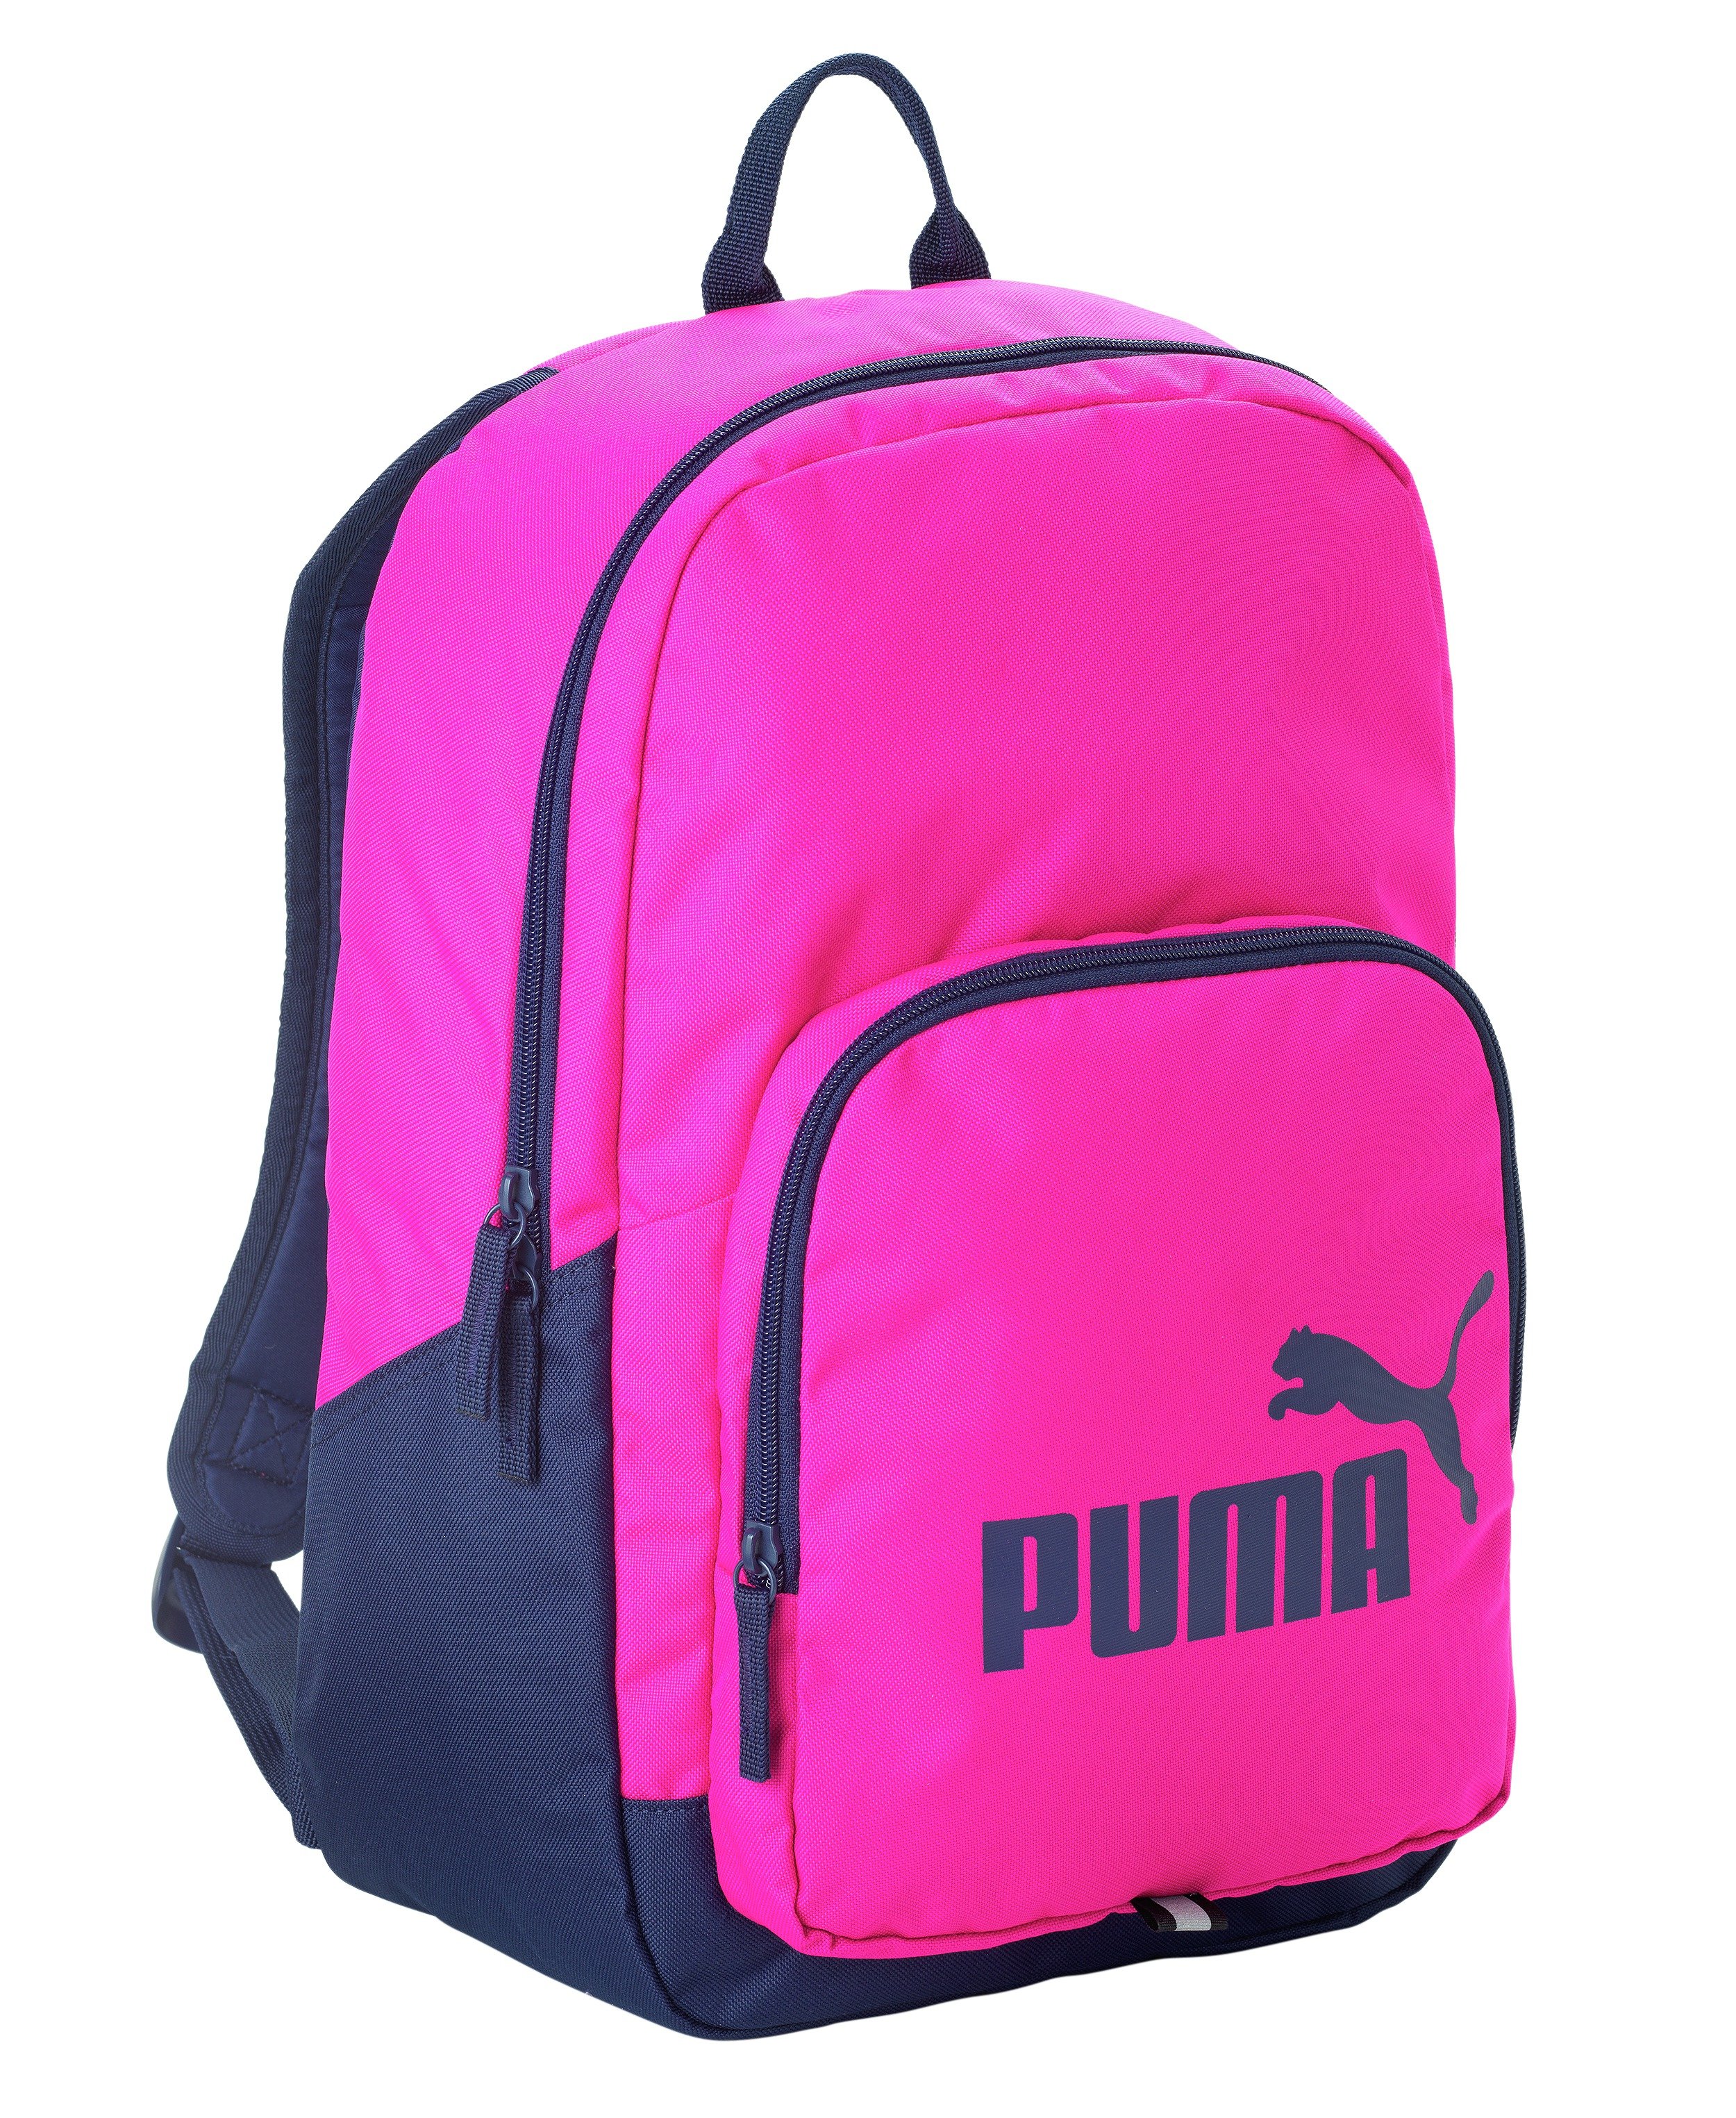 Puma Phase Backpack - Pink